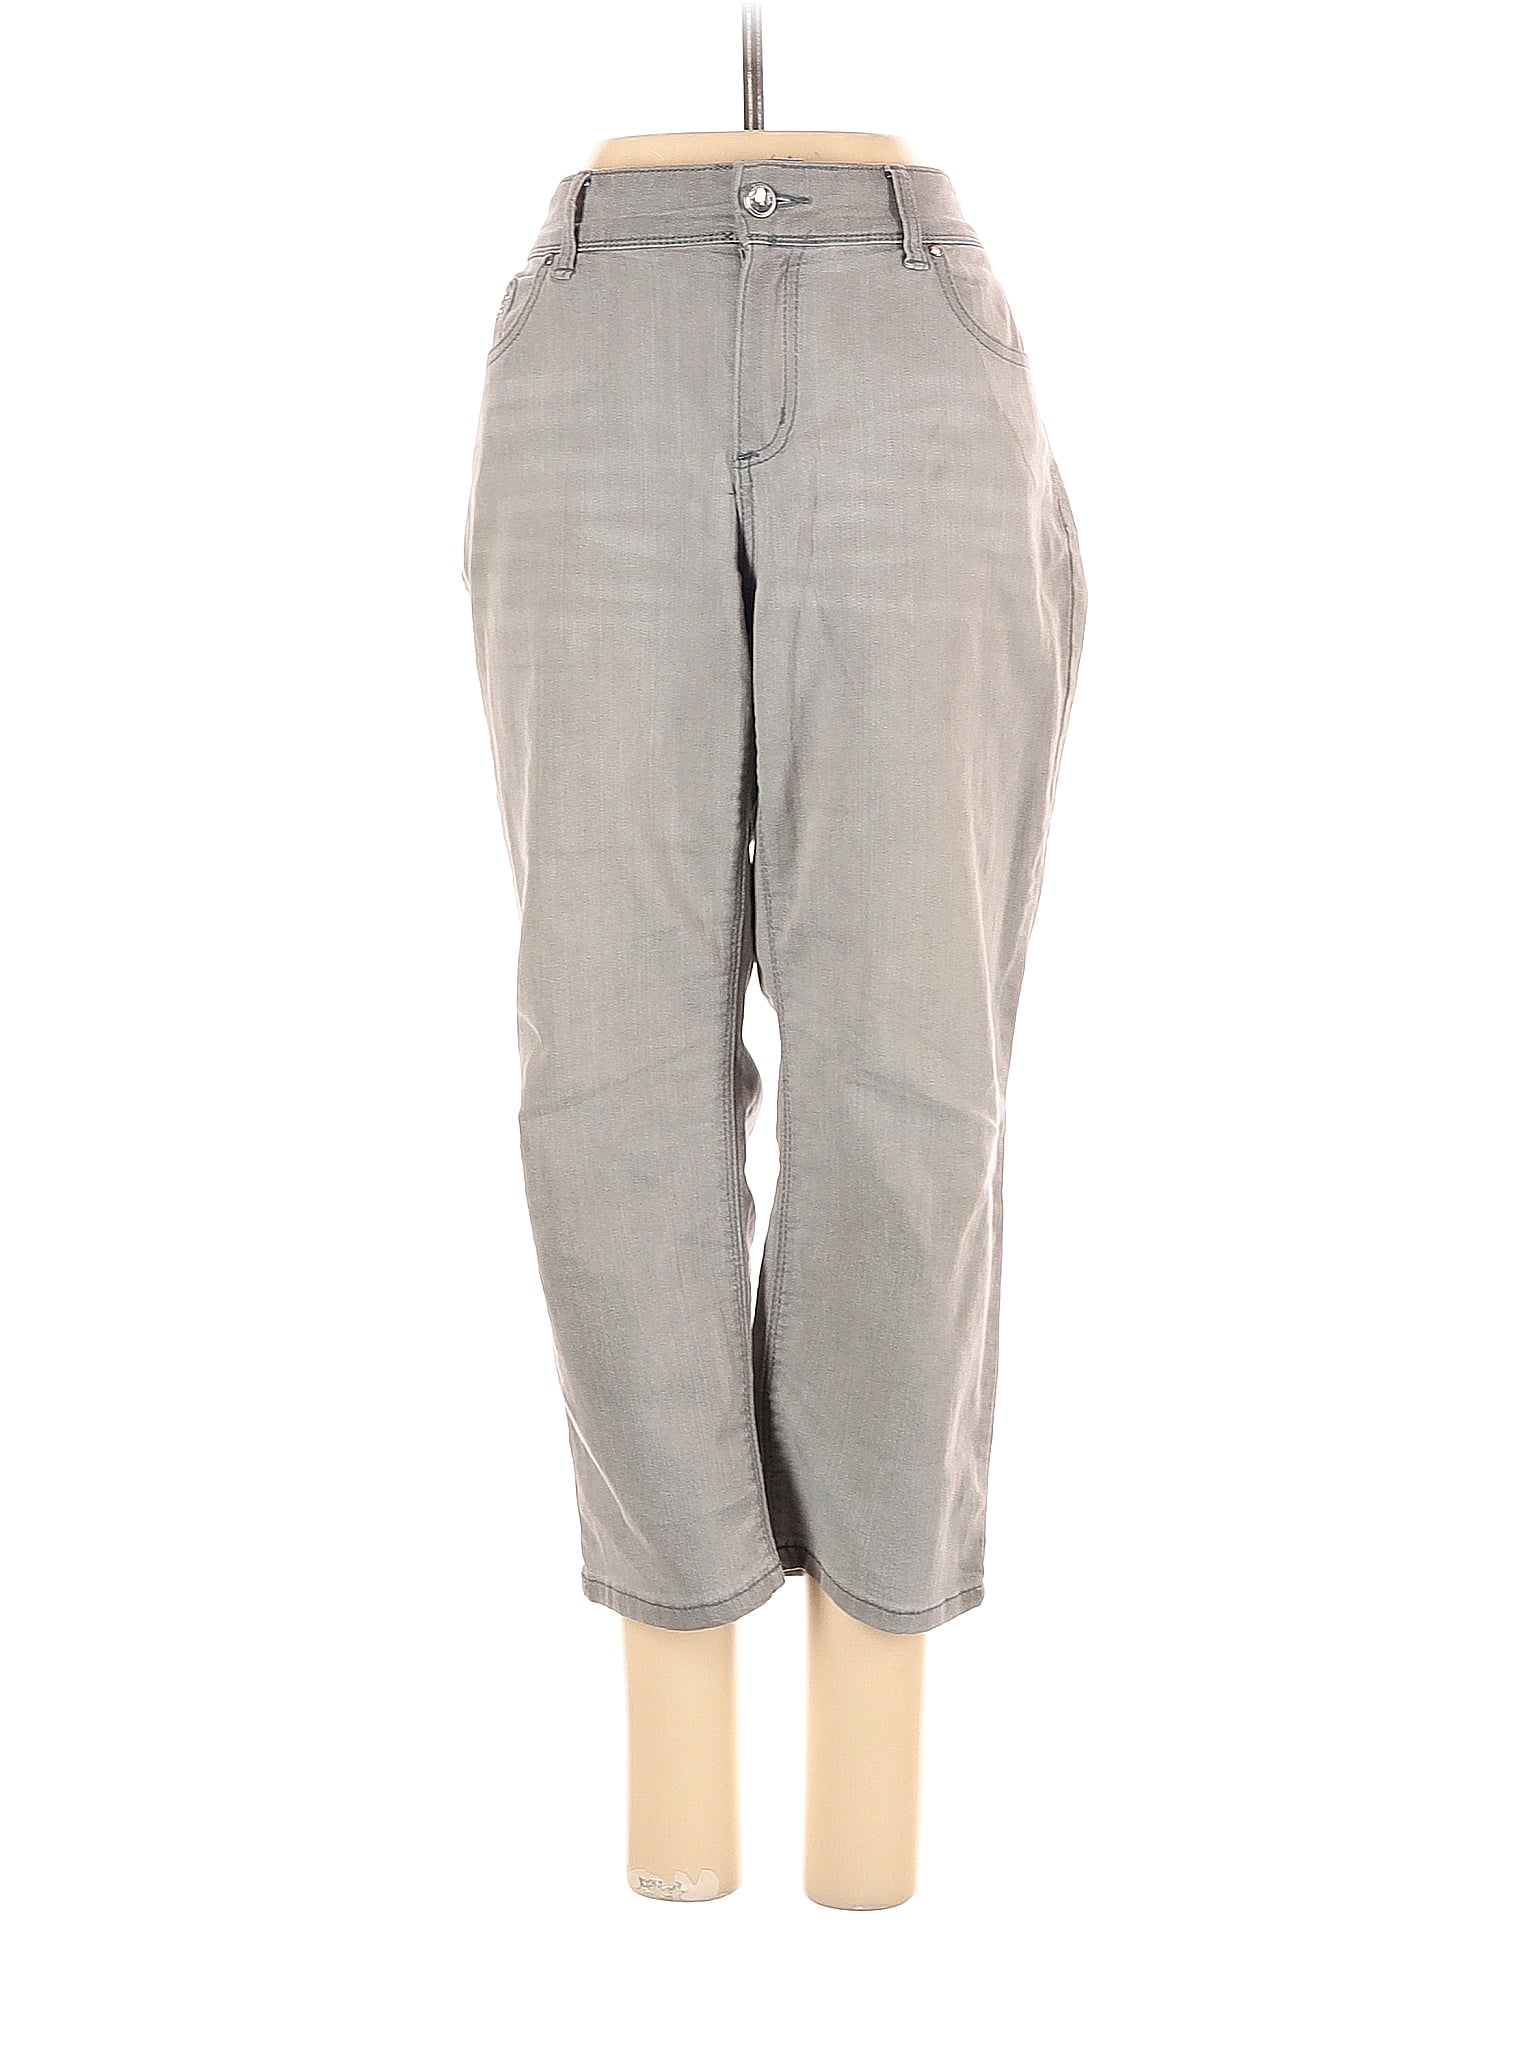 Platinum Gray Jeans Size 1 - 68% off | thredUP